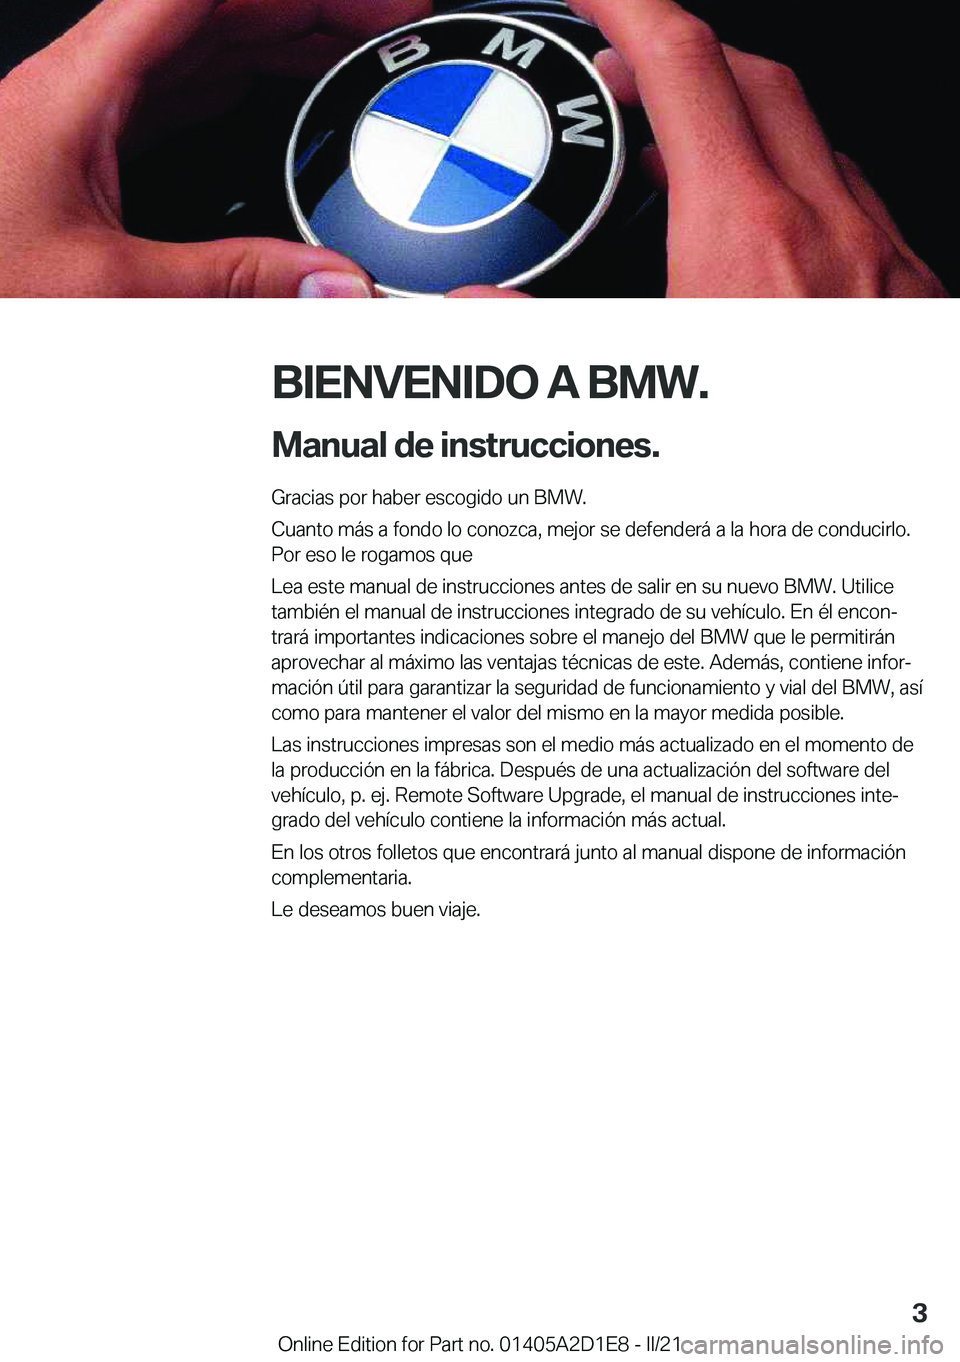 BMW X6 M 2021  Manuales de Empleo (in Spanish) �B�I�E�N�V�E�N�I�D�O��A��B�M�W�.
�M�a�n�u�a�l��d�e��i�n�s�t�r�u�c�c�i�o�n�e�s�. �G�r�a�c�i�a�s��p�o�r��h�a�b�e�r��e�s�c�o�g�i�d�o��u�n��B�M�W�.
�C�u�a�n�t�o��m�